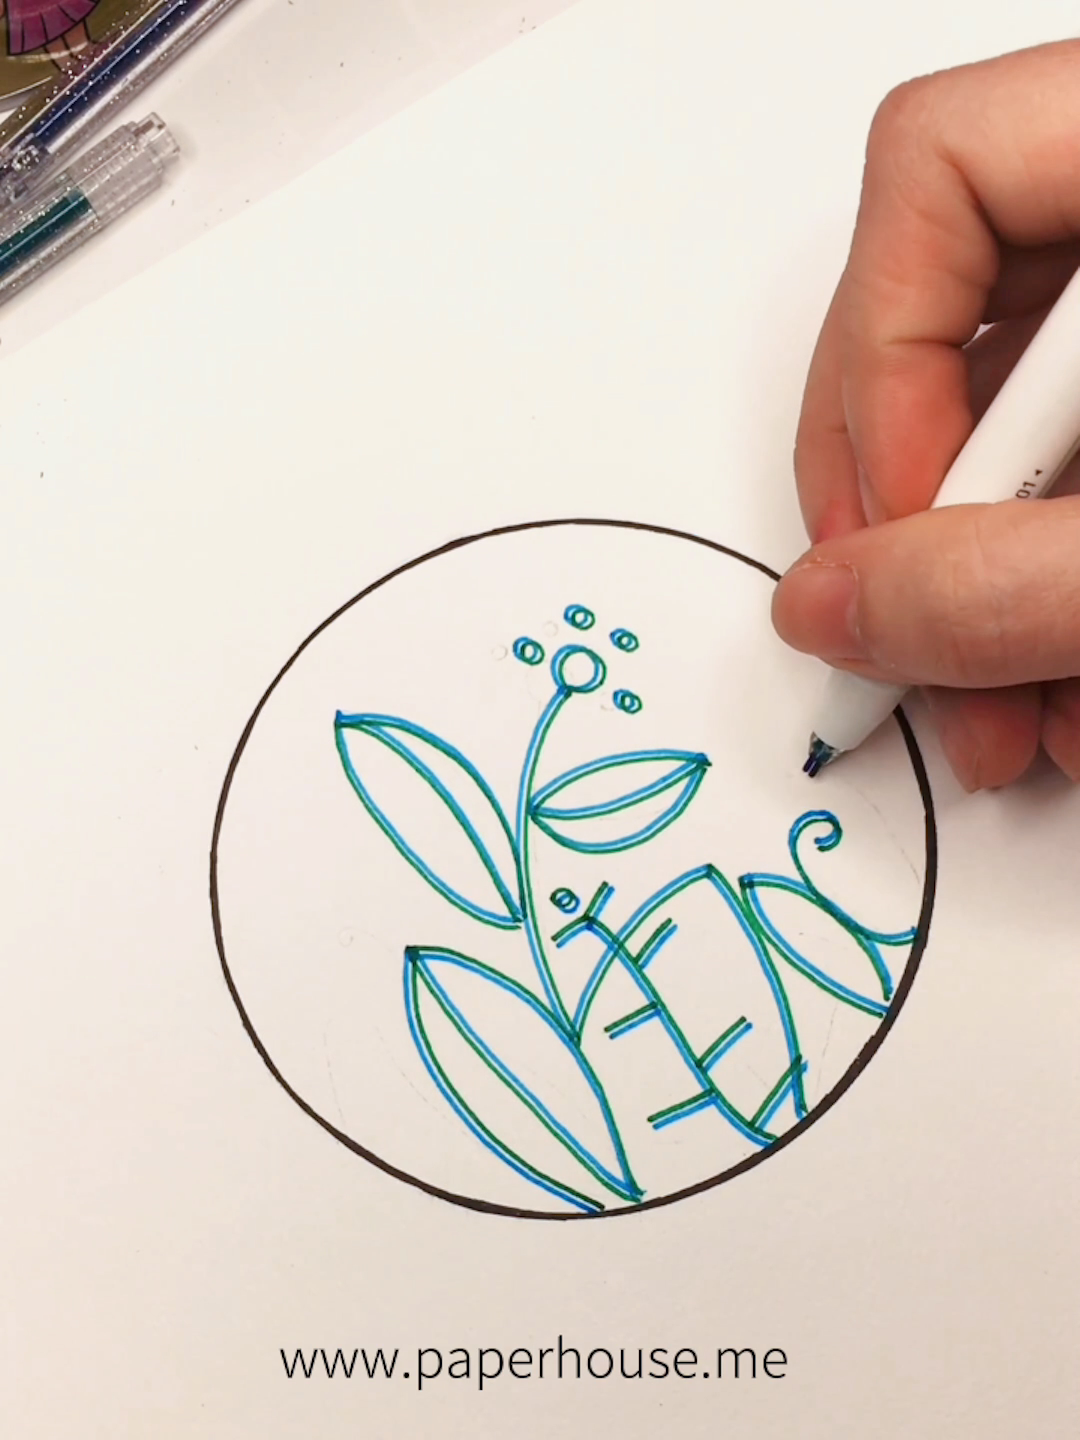 18 cute planting Art ideas